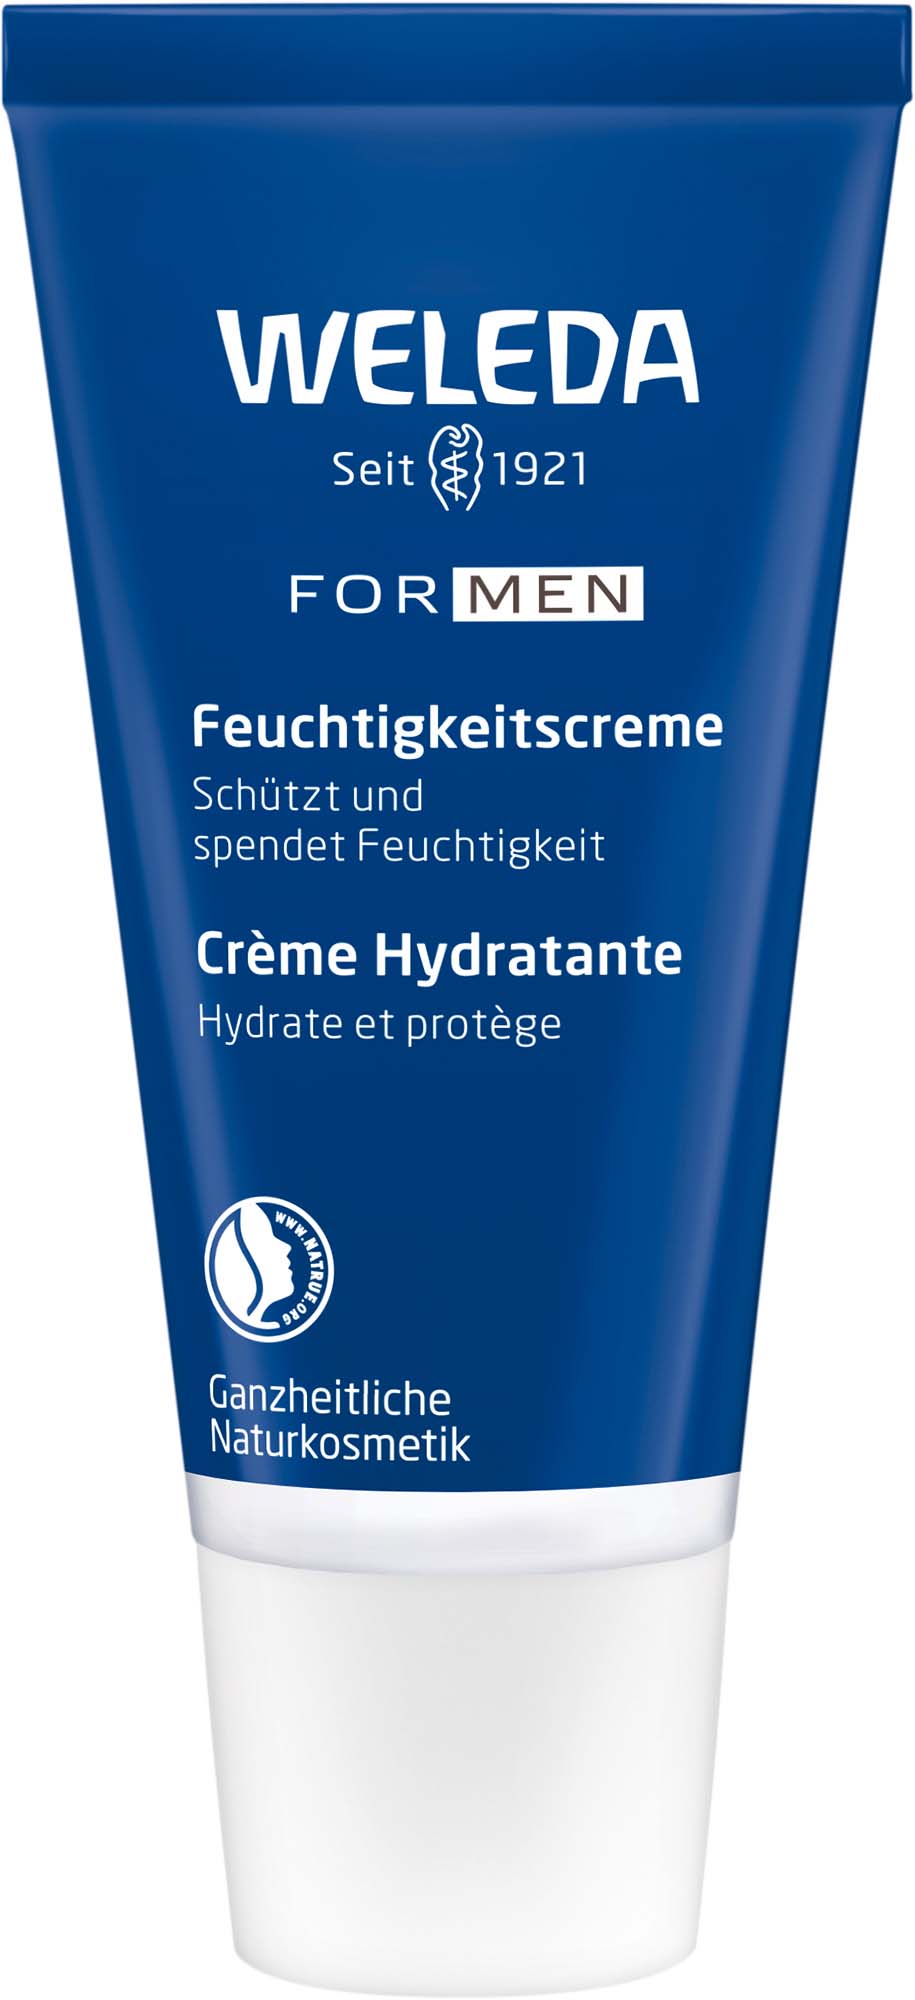 FOR MEN Crème hydratante